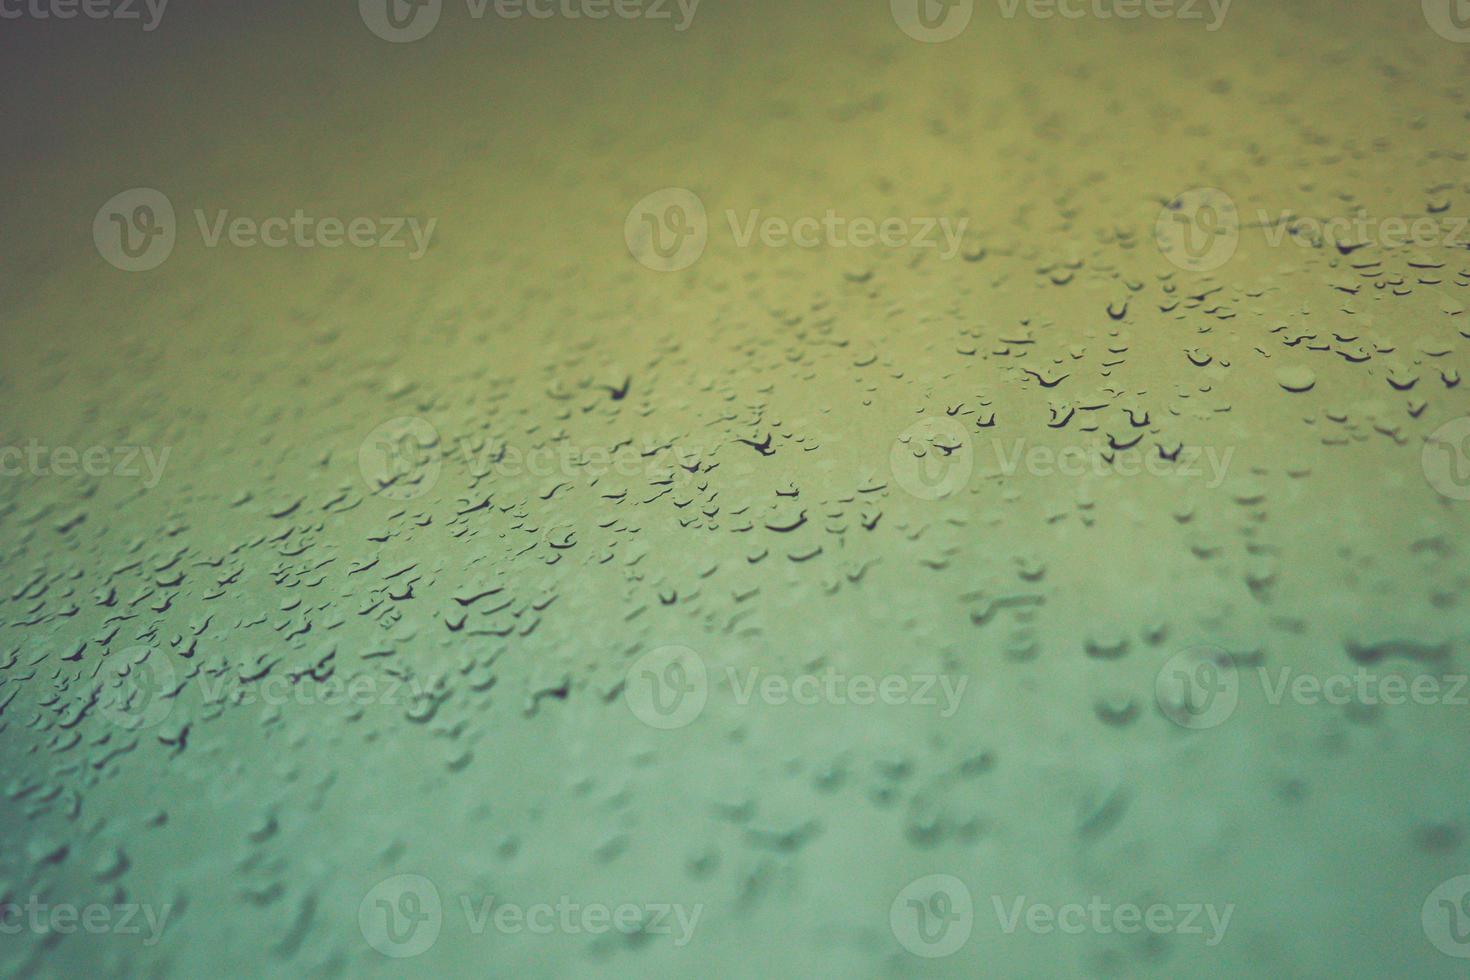 pingos de chuva na janela de vidro. Profundidade de campo rasa foto